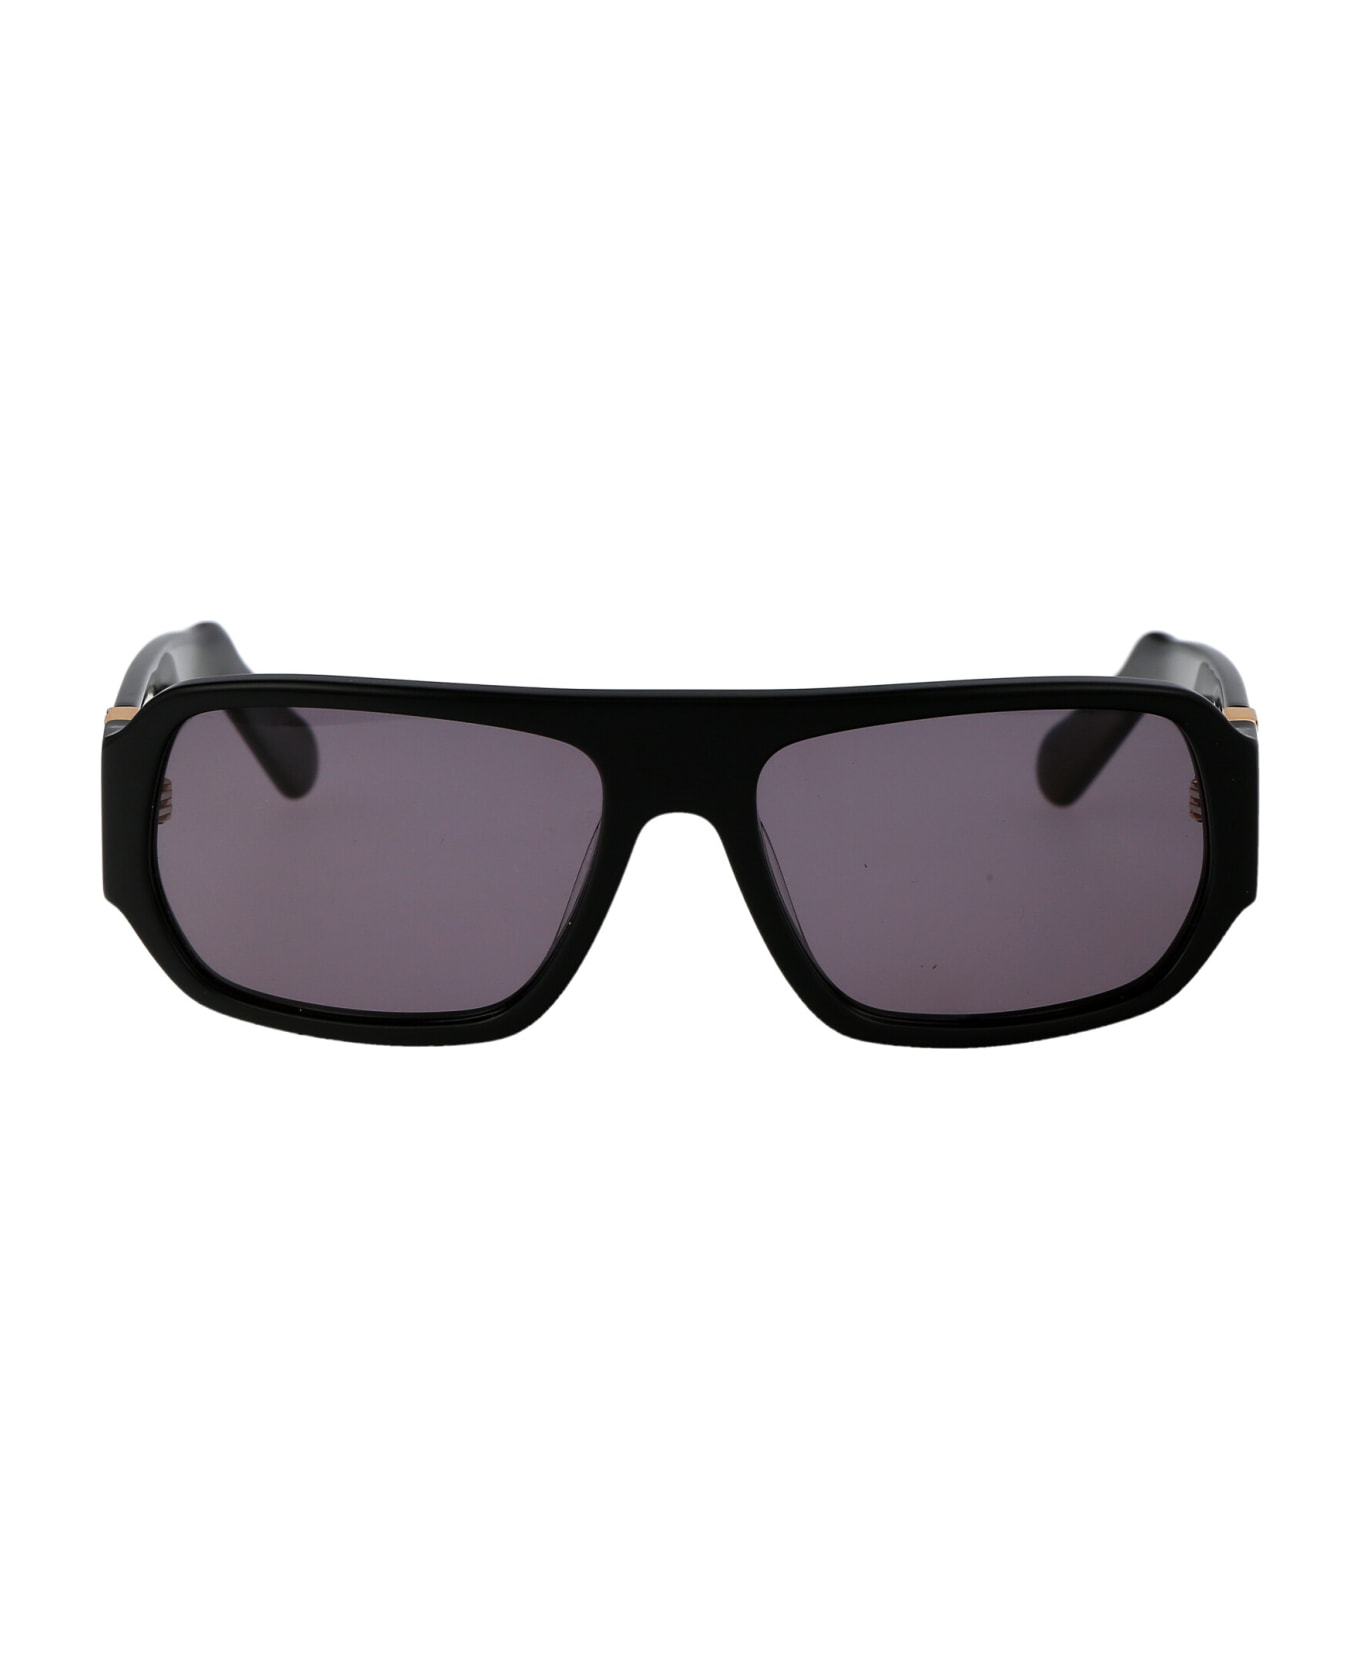 GCDS Gd0034 Sunglasses - 01A Nero Lucido/Fumo サングラス